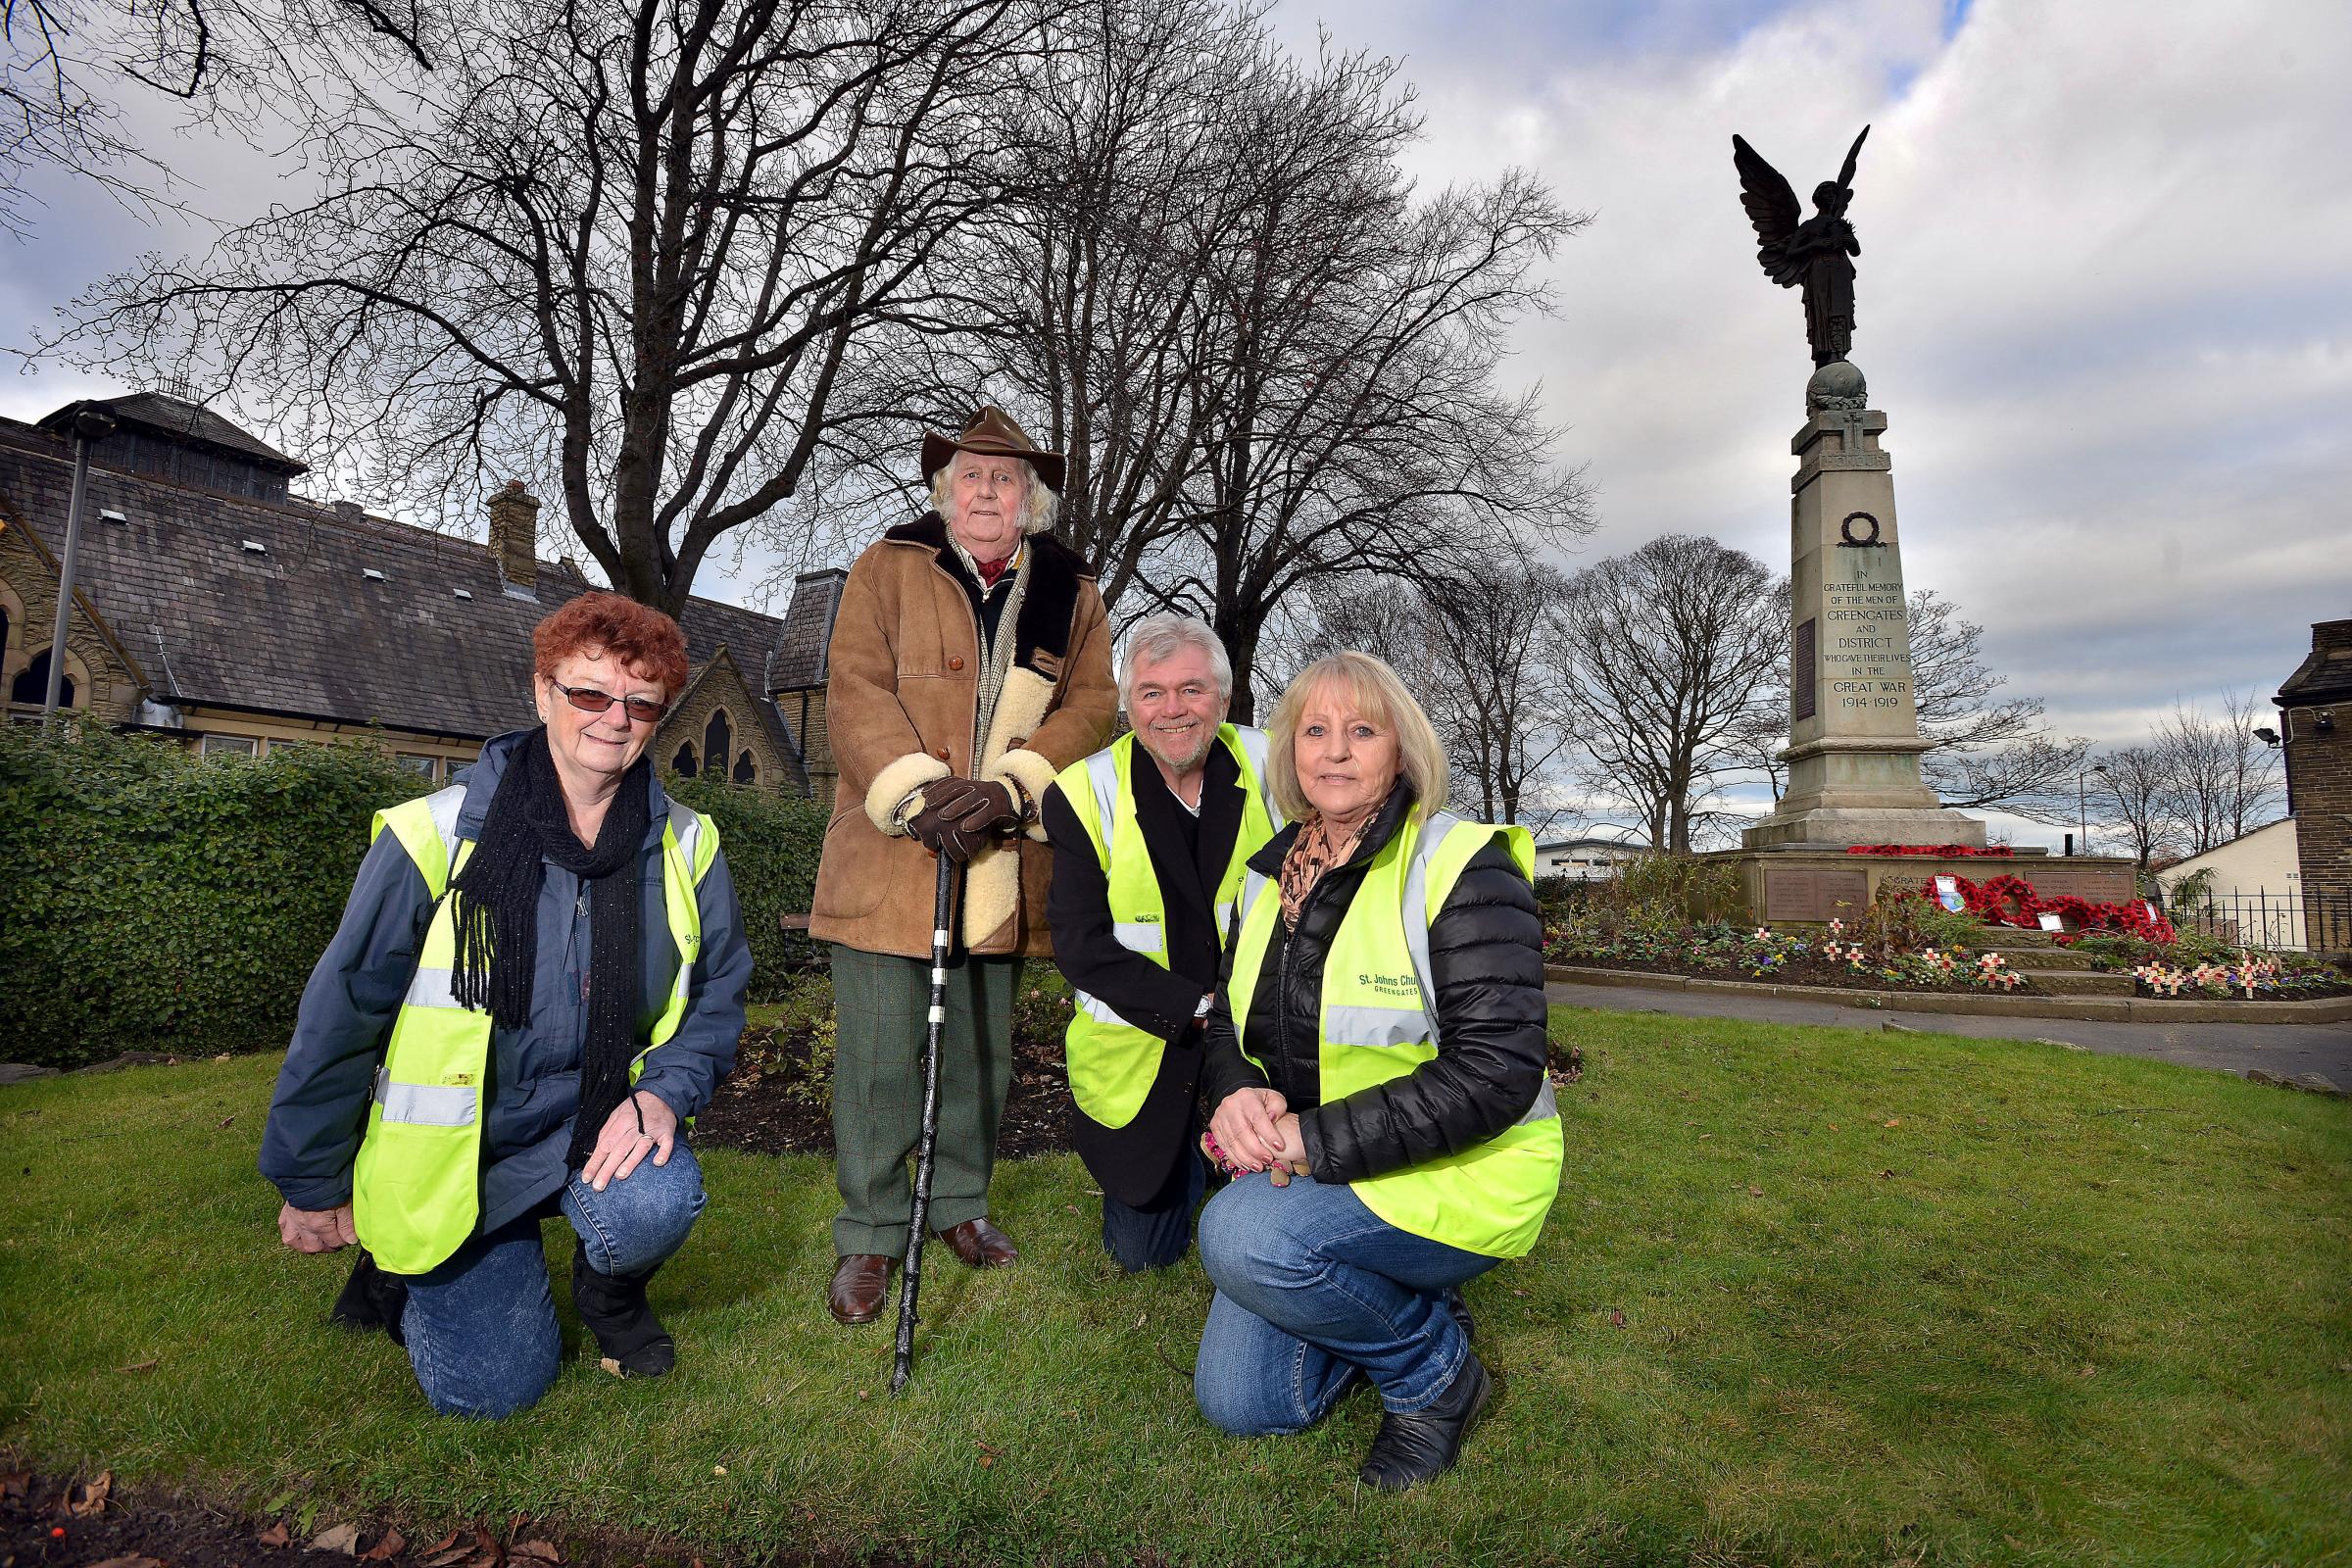 War memorial restored back to glory